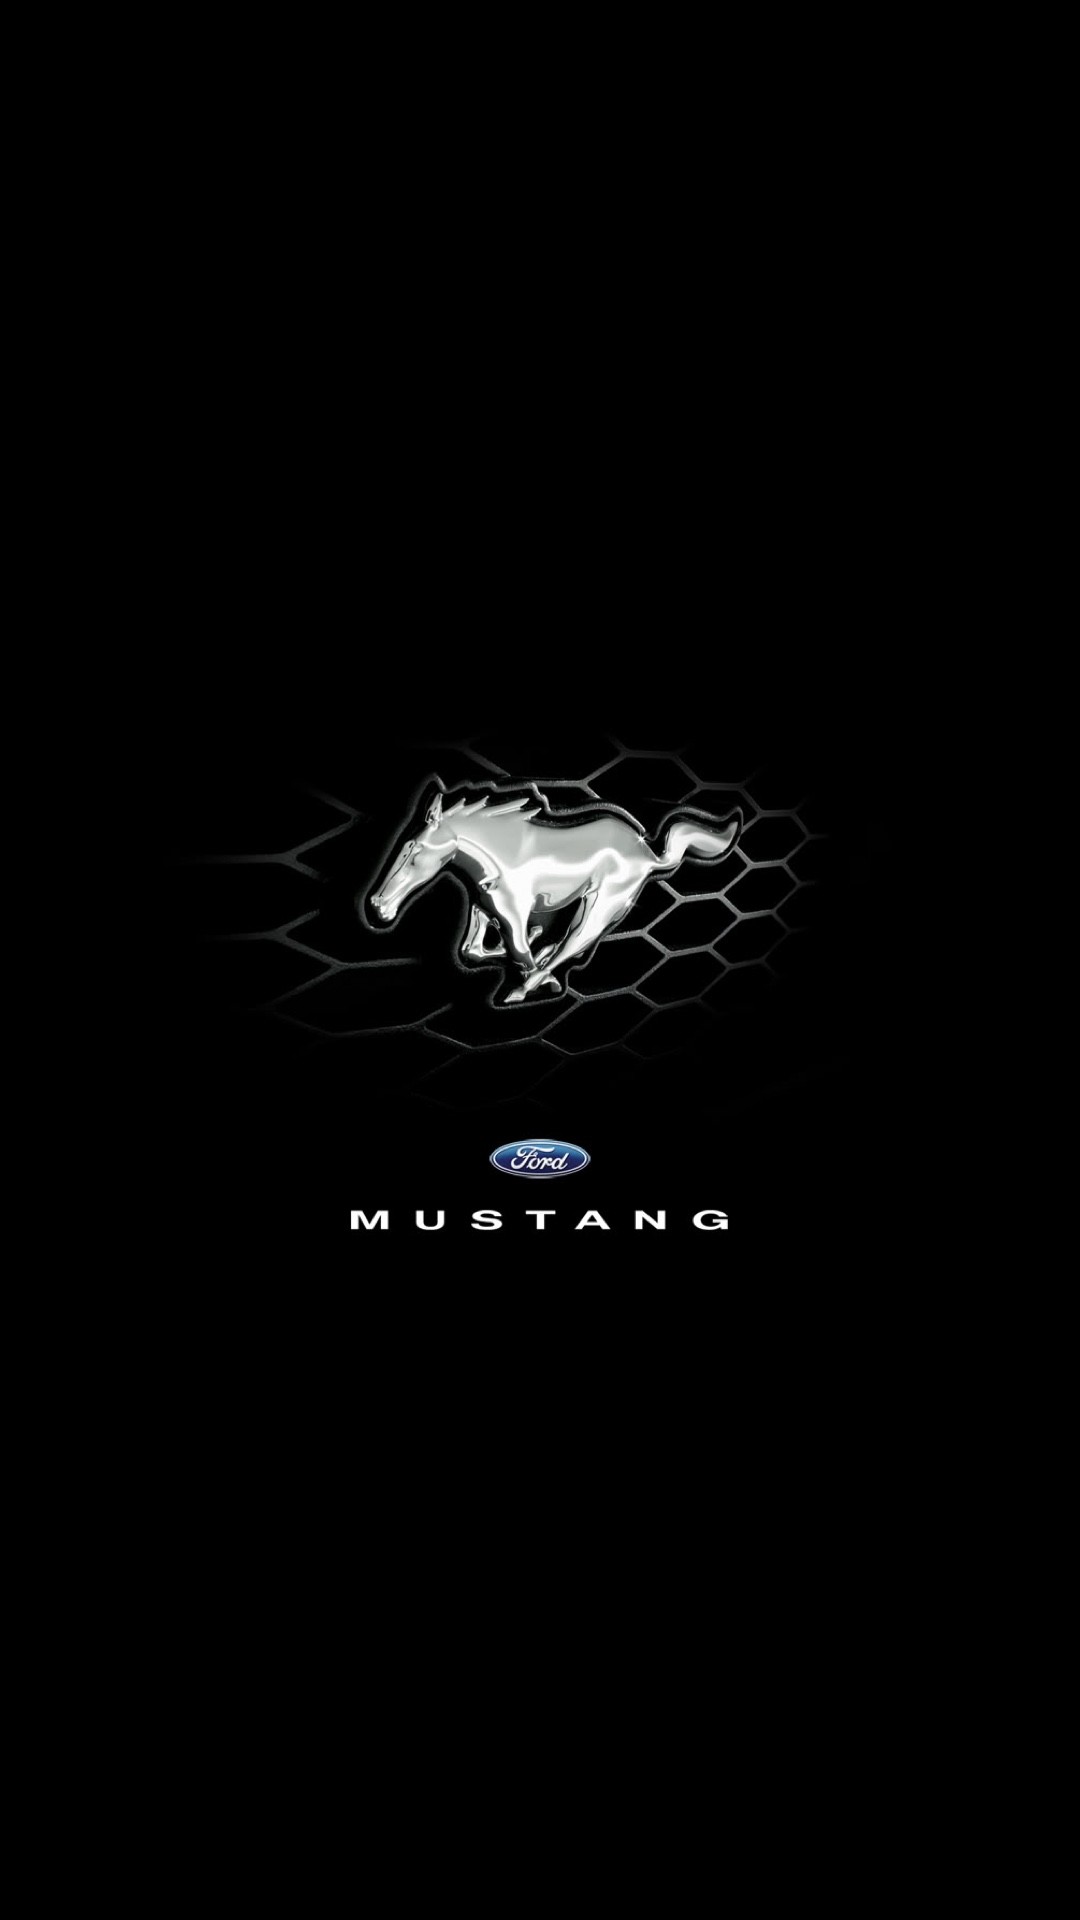 Mustang Logo Wallpaper ·① WallpaperTag